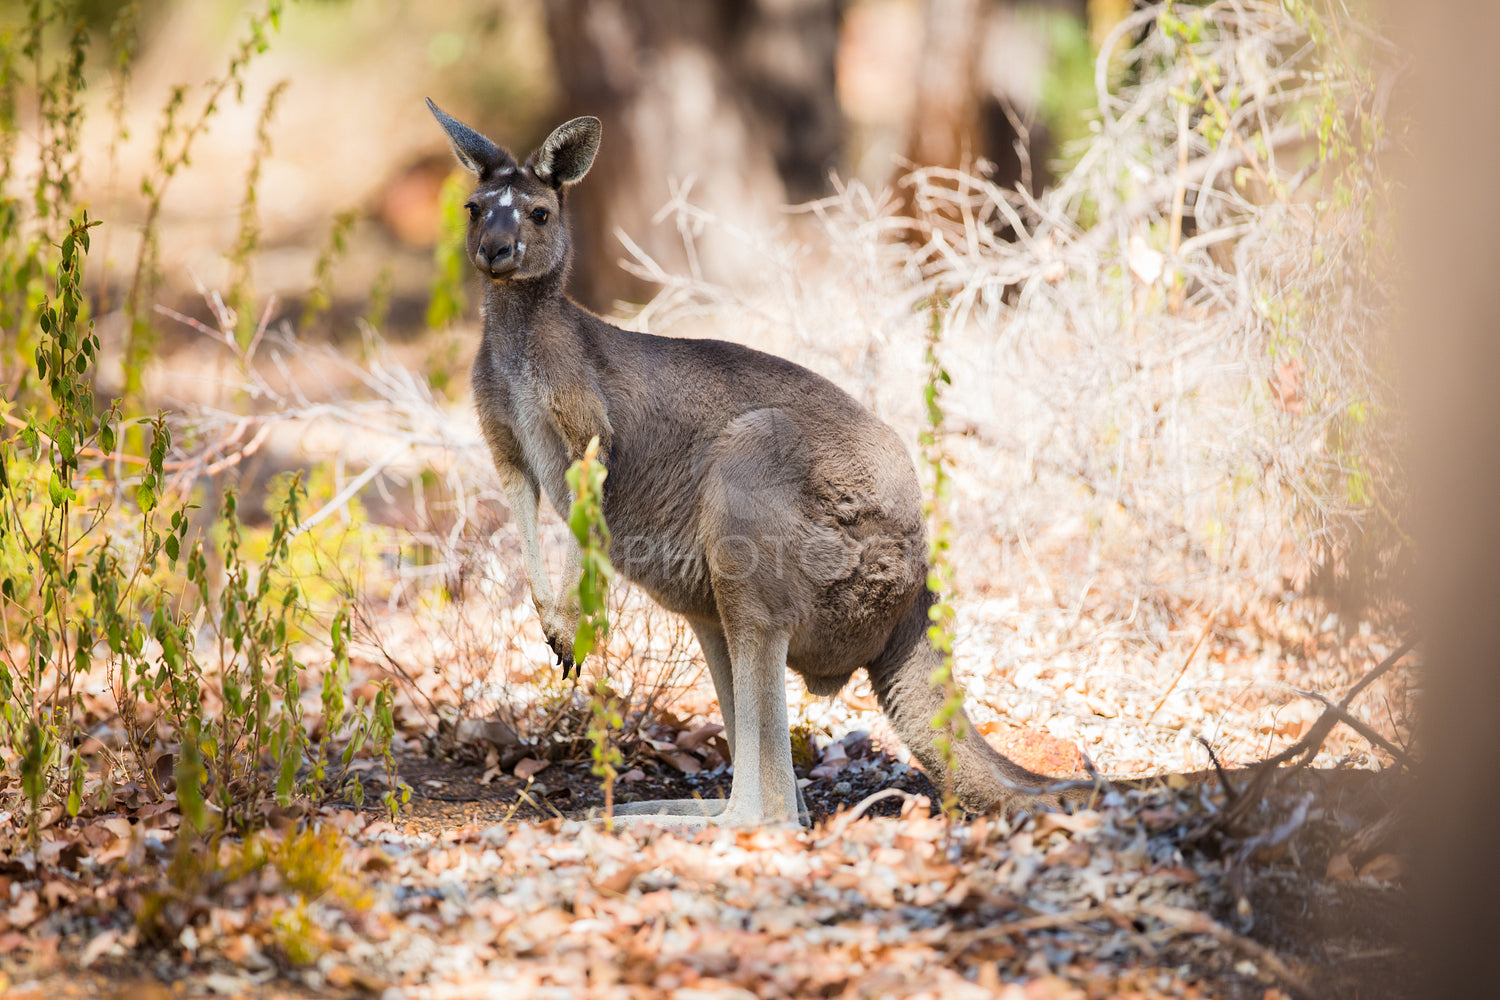 One kangaroo in the wild